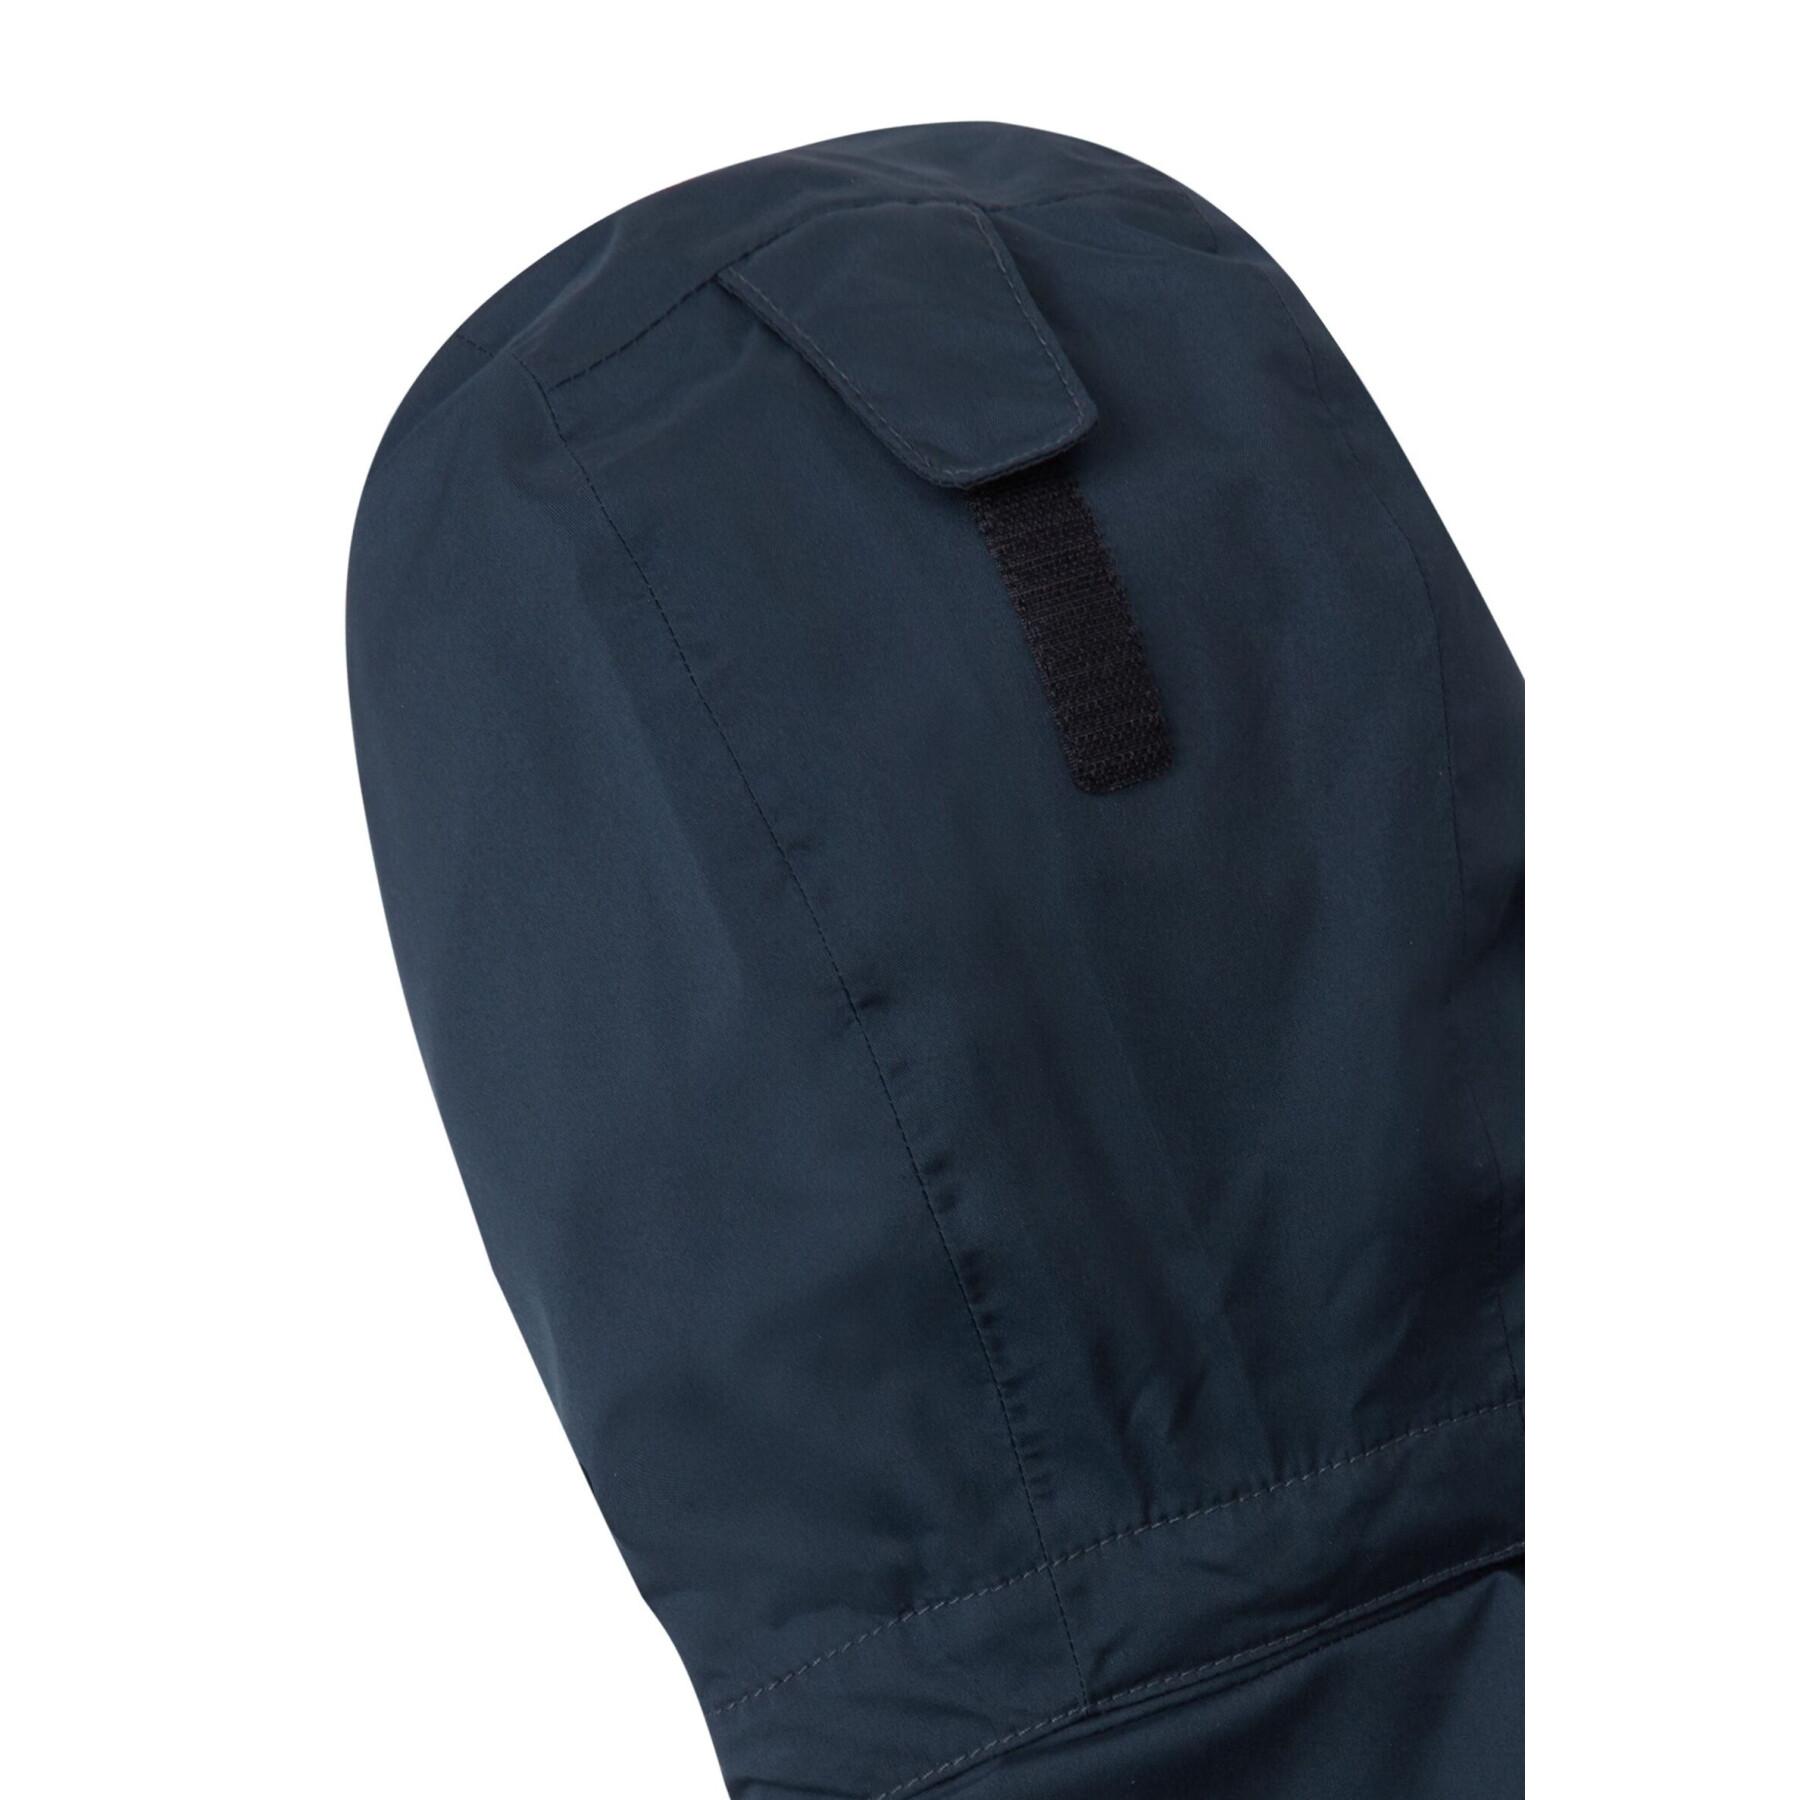 Waterproof jacket for children Reima Reima tec Seiskari